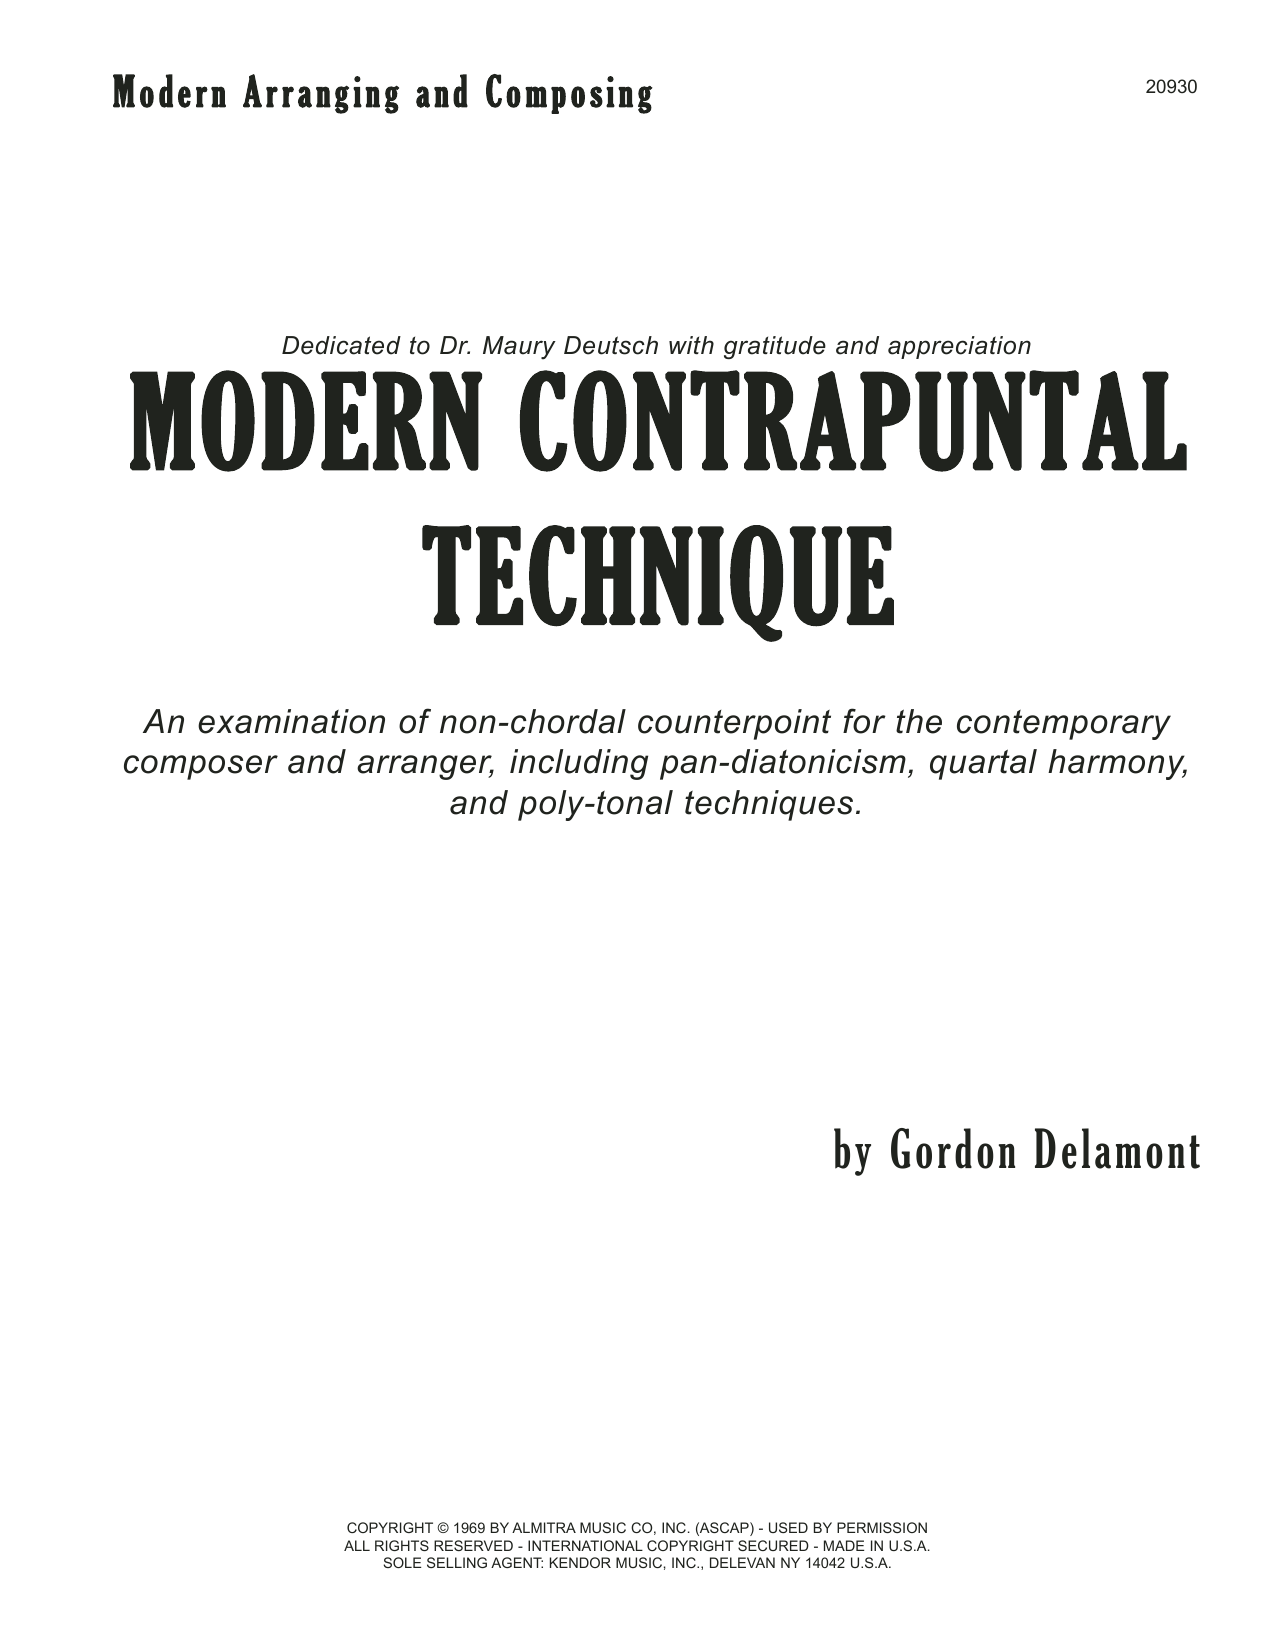 Download Gordon Delamont Modern Contrapuntal Technique Sheet Music